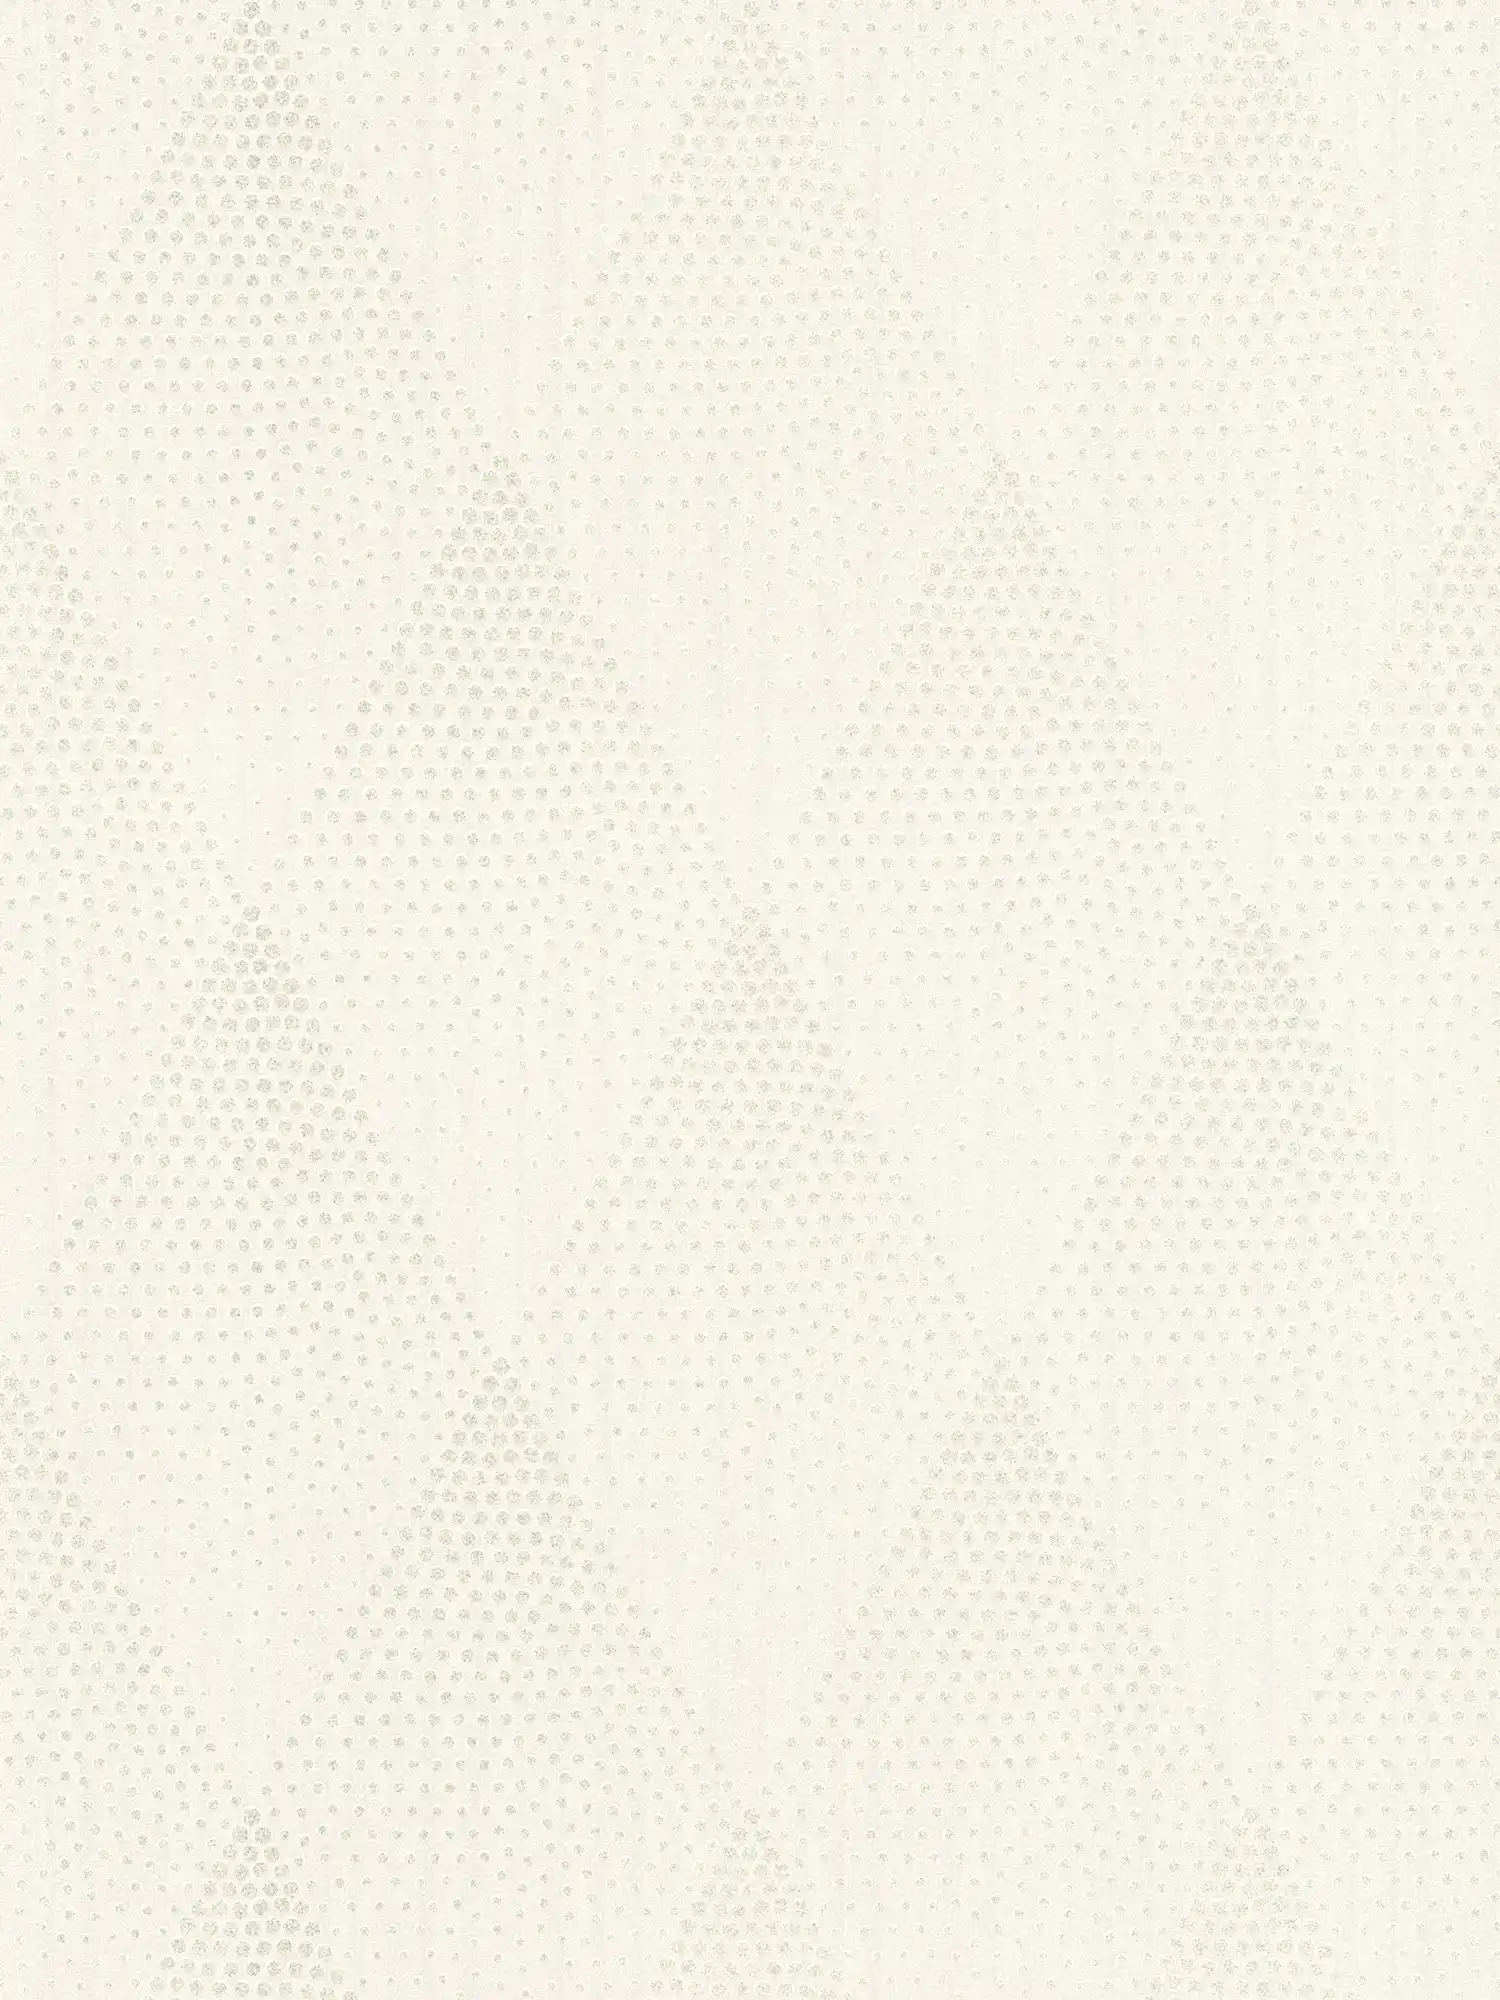 Dots wallpaper glitter effect in retro style - white, silver, grey
